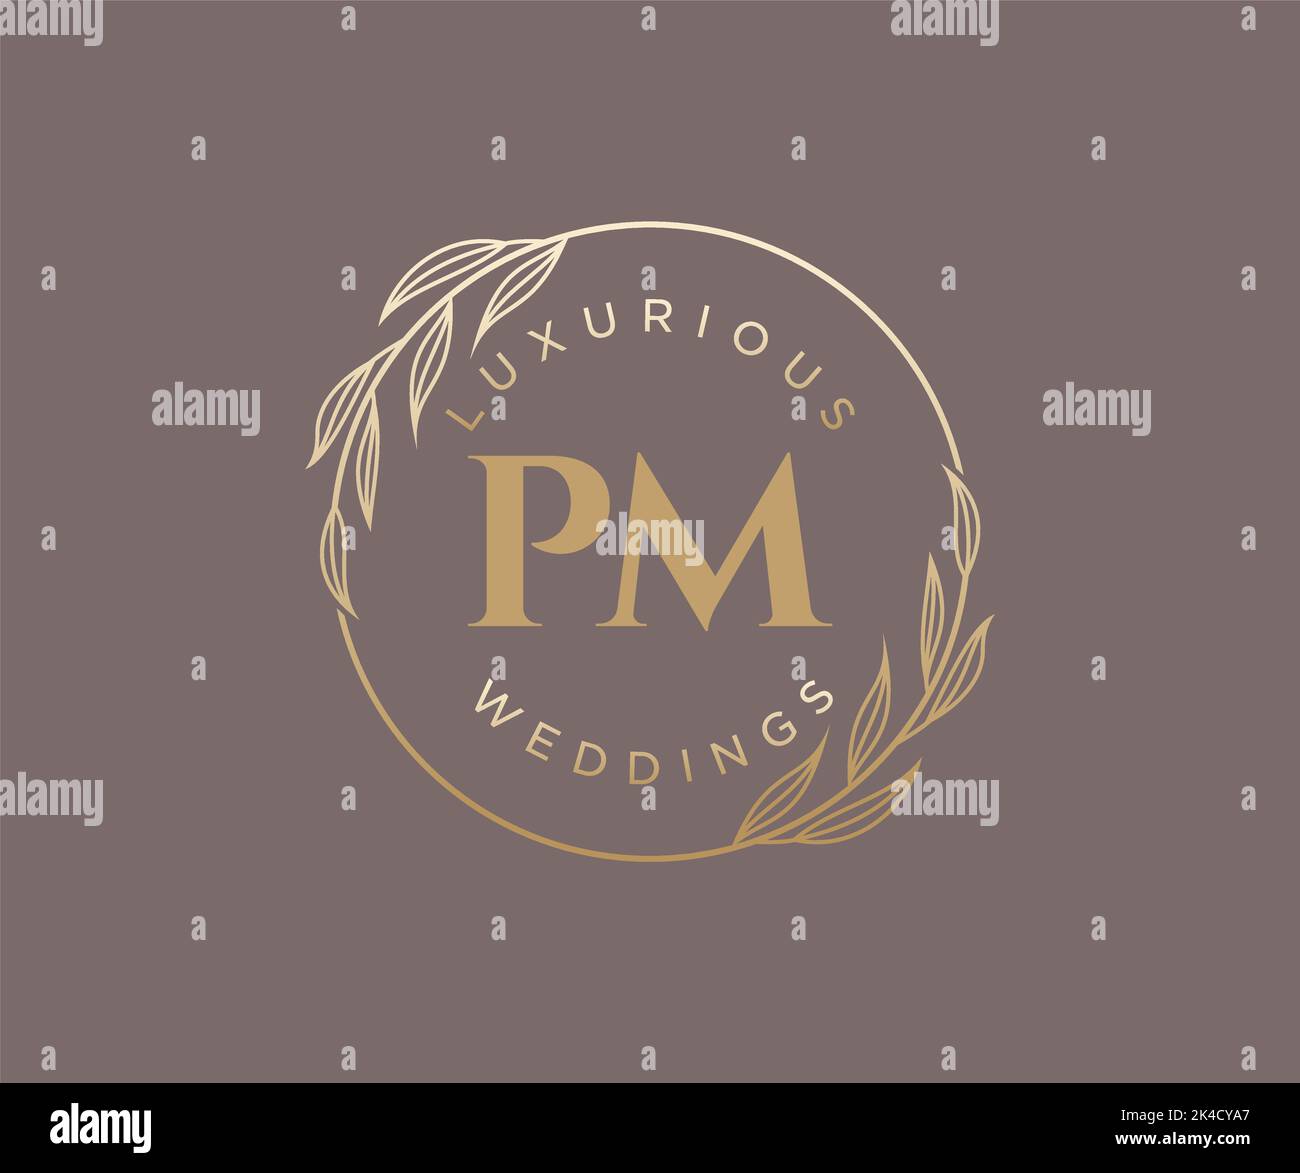 Pm initials letter wedding monogram logos Vector Image